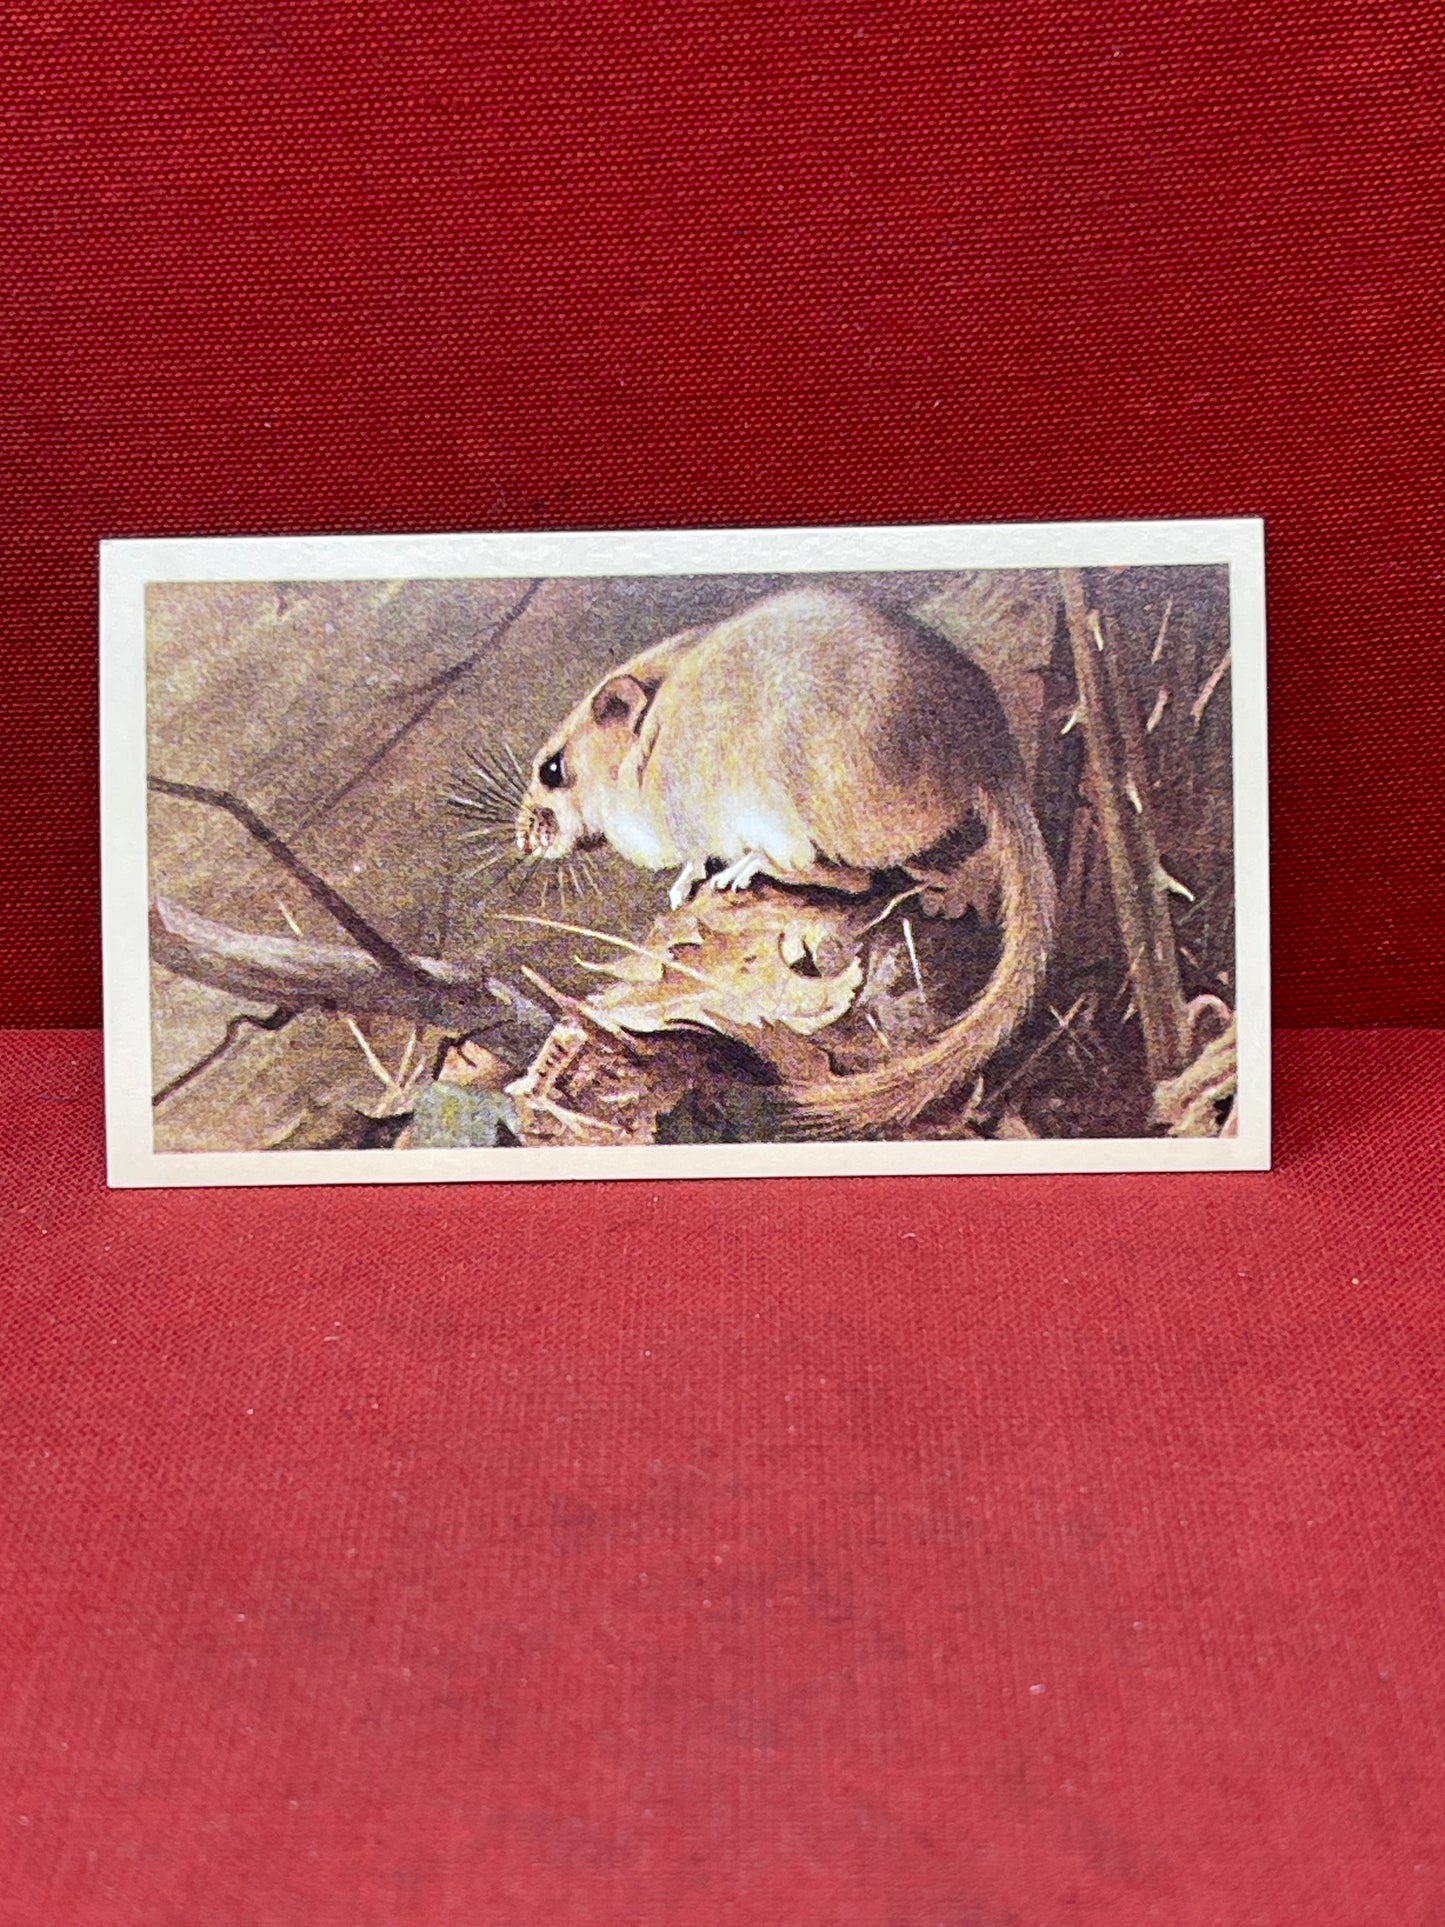 Players British Mammals Grandee Ltd Issue 1982 Cigarette Cards